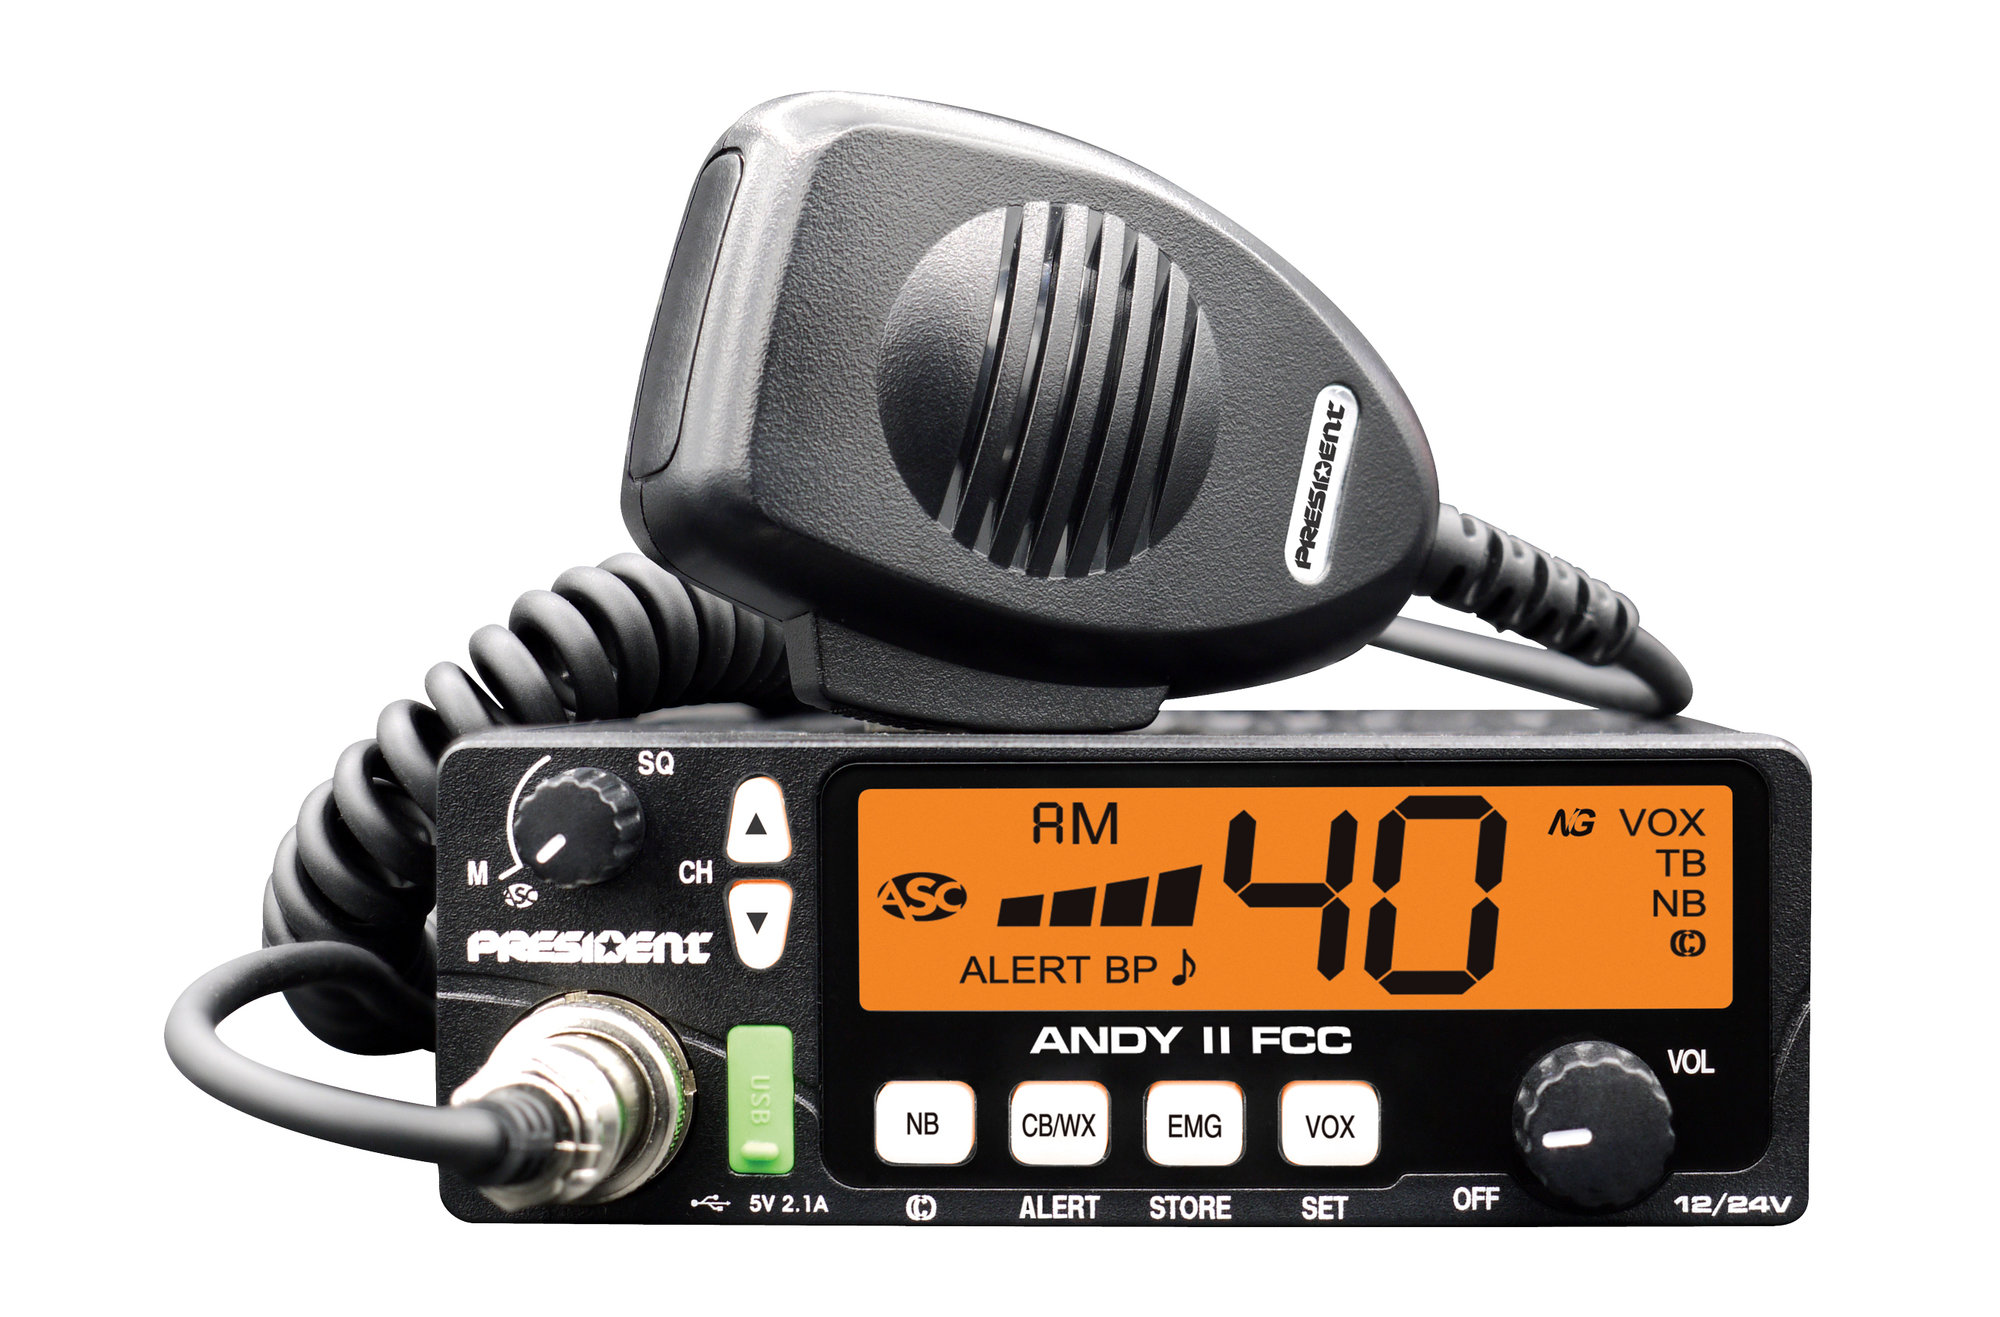 President Electronics TXUS076-1 Andy II FCC CB Radio | Quadratec